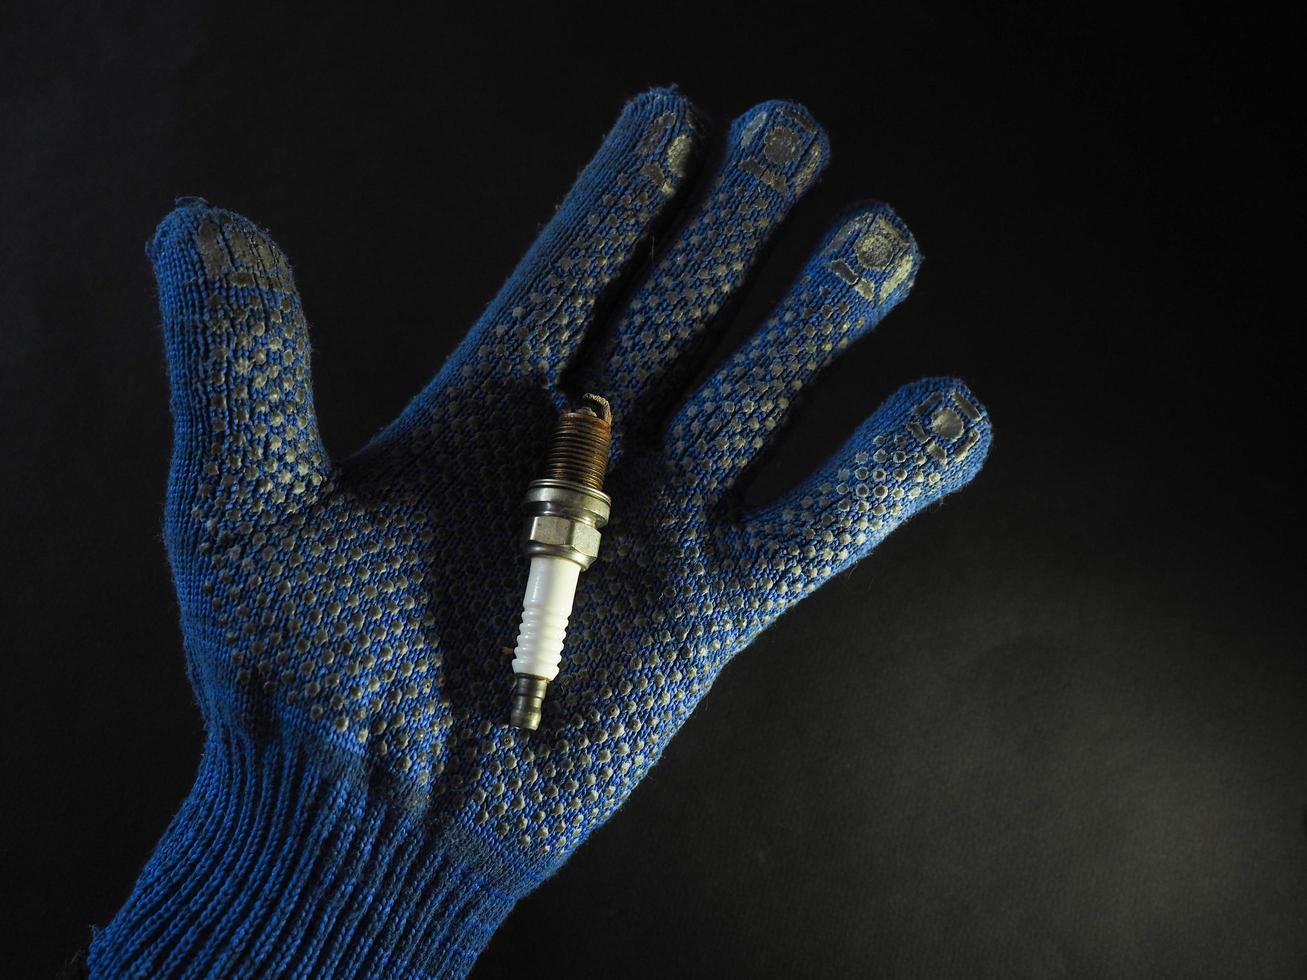 A faulty car spark plug in a man's blue work glove against a black background photo